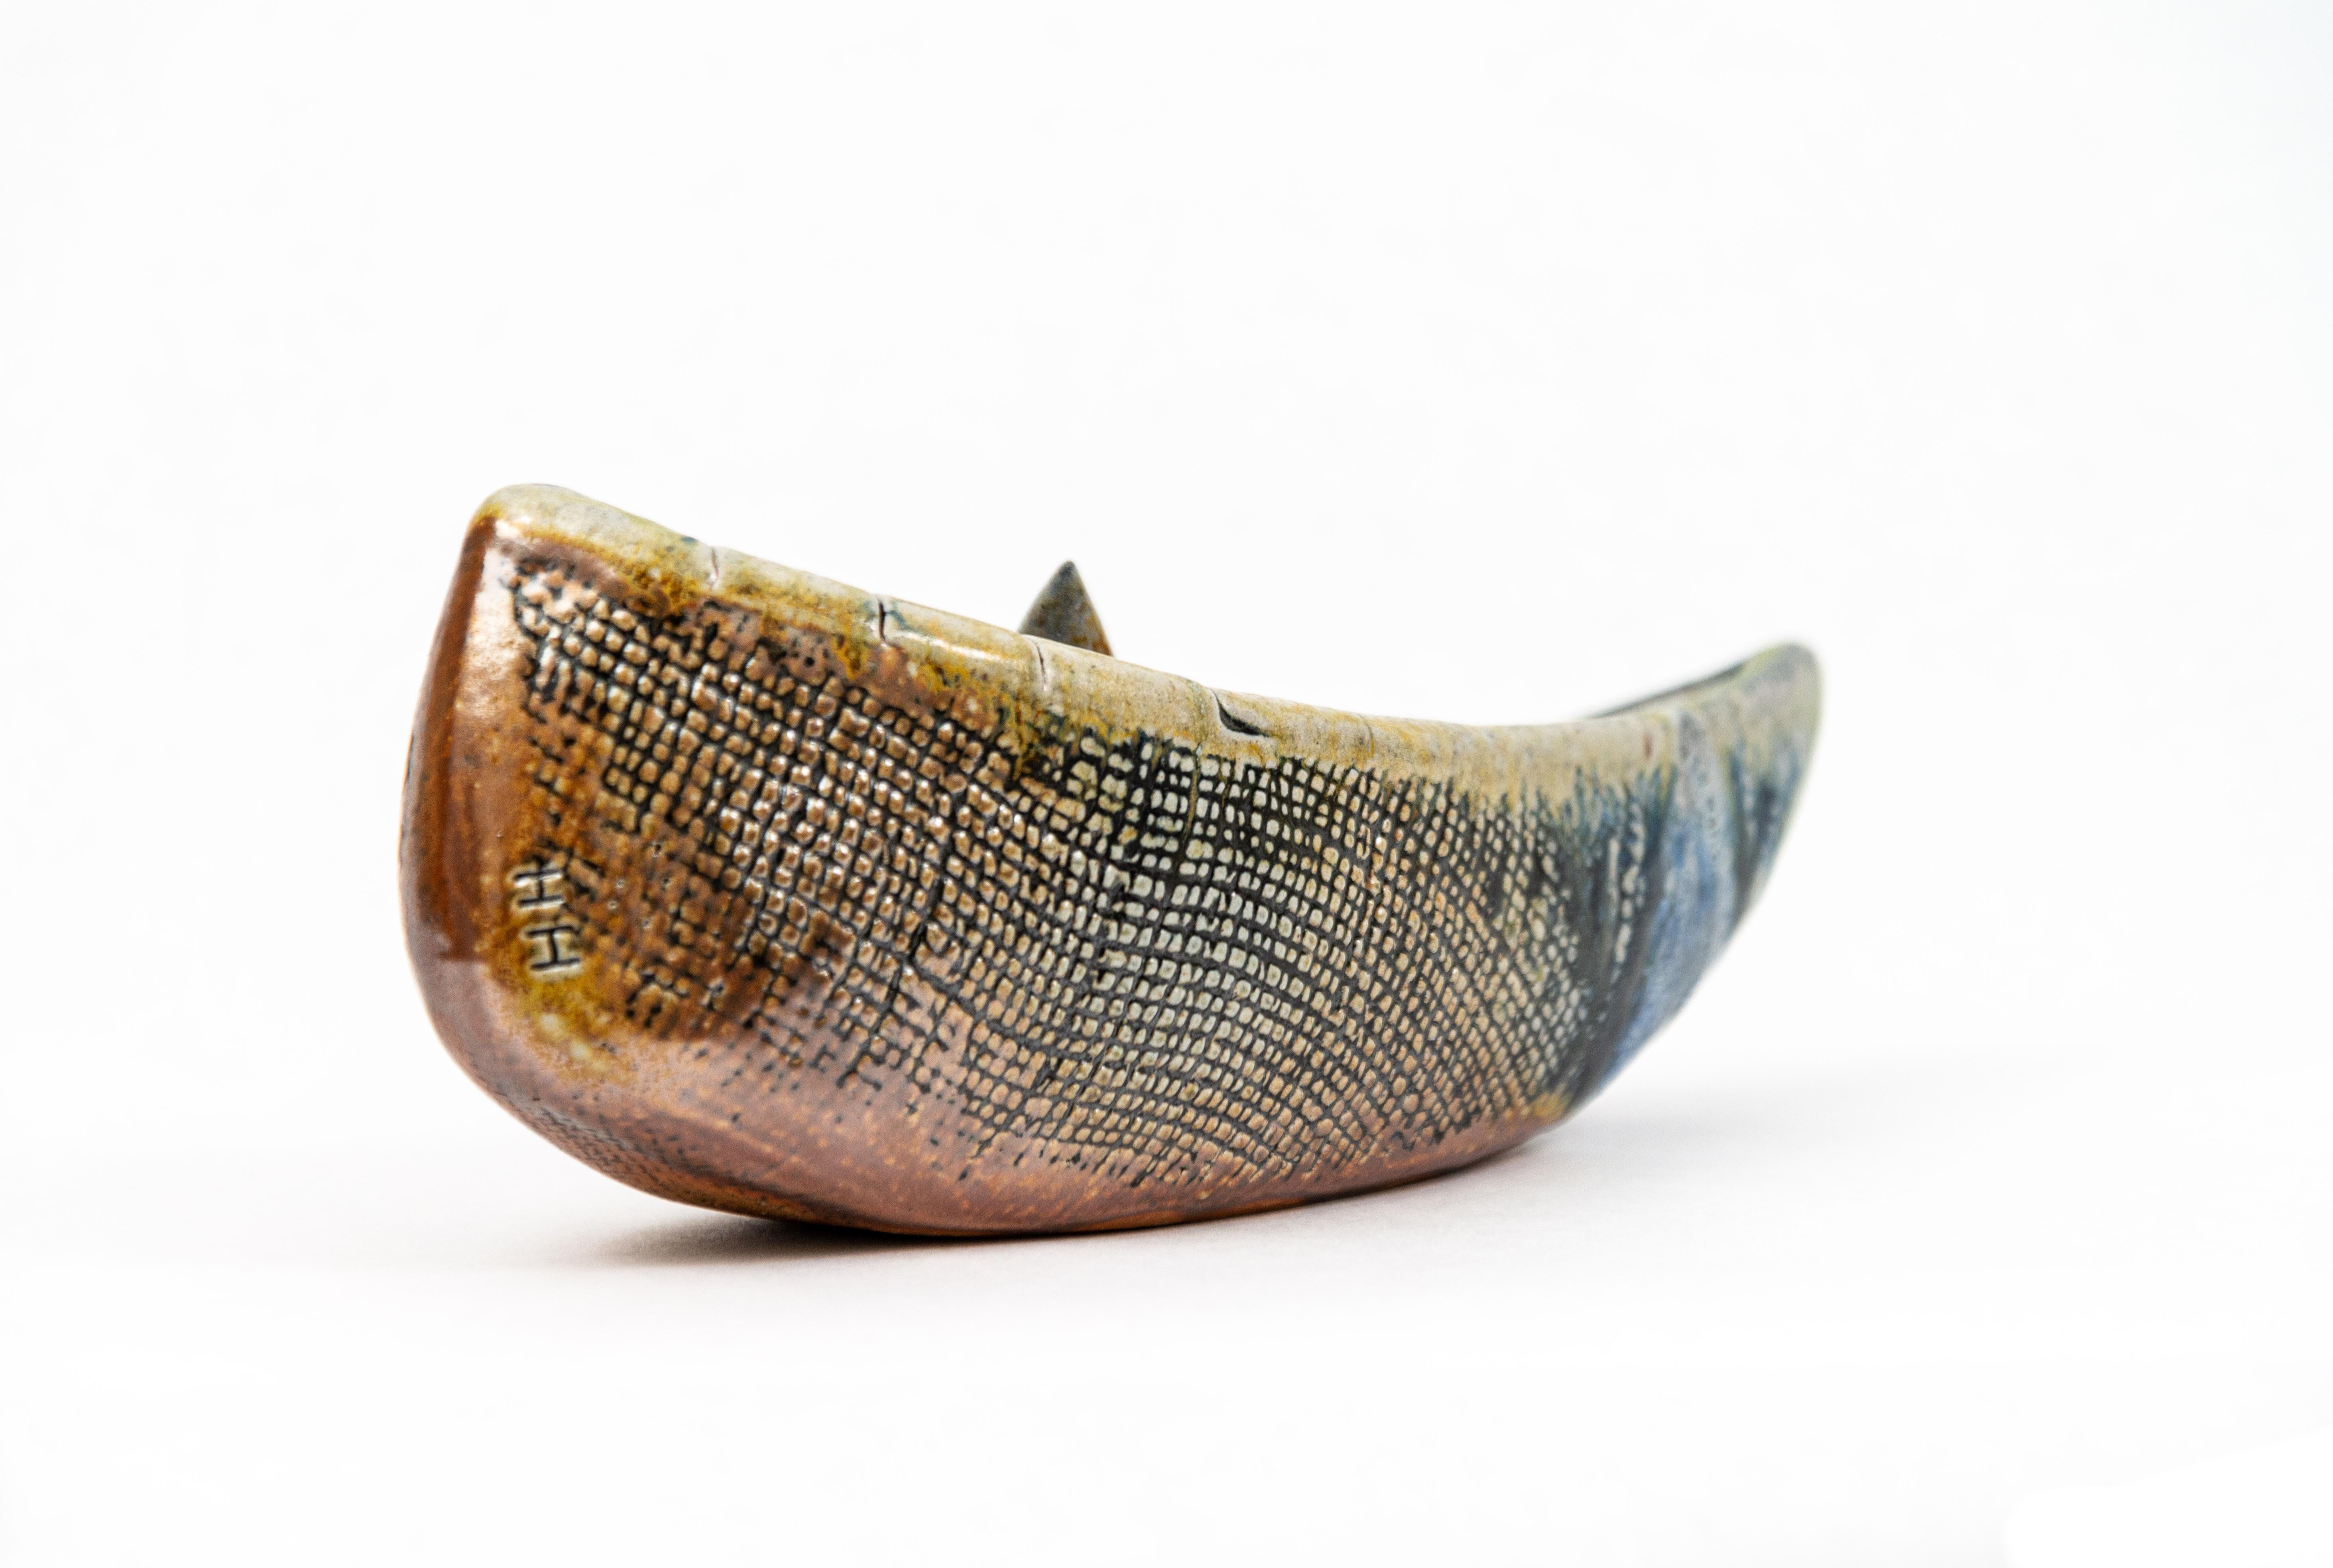 Embarking - detailed, inscribed, hand-built, vessel, glass, ceramic sculpture - Contemporary Sculpture by Heather Allen Hietala